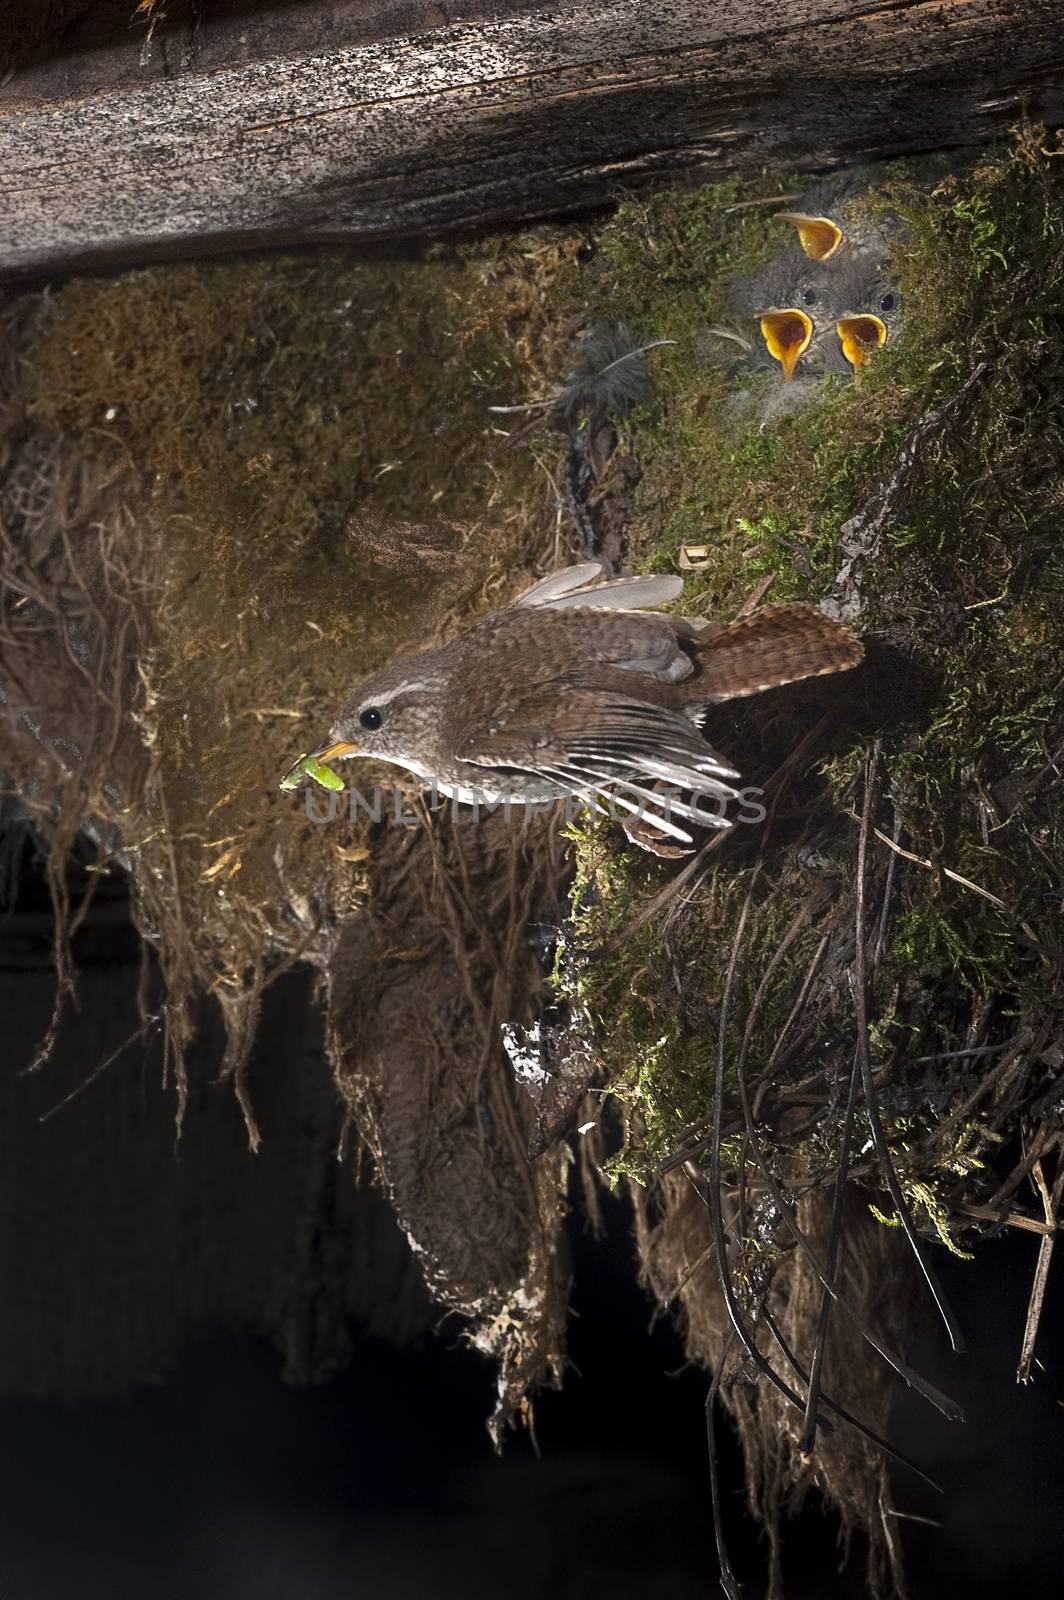 House Wren, Troglodytes troglodytes, in flight, near its nest by jalonsohu@gmail.com